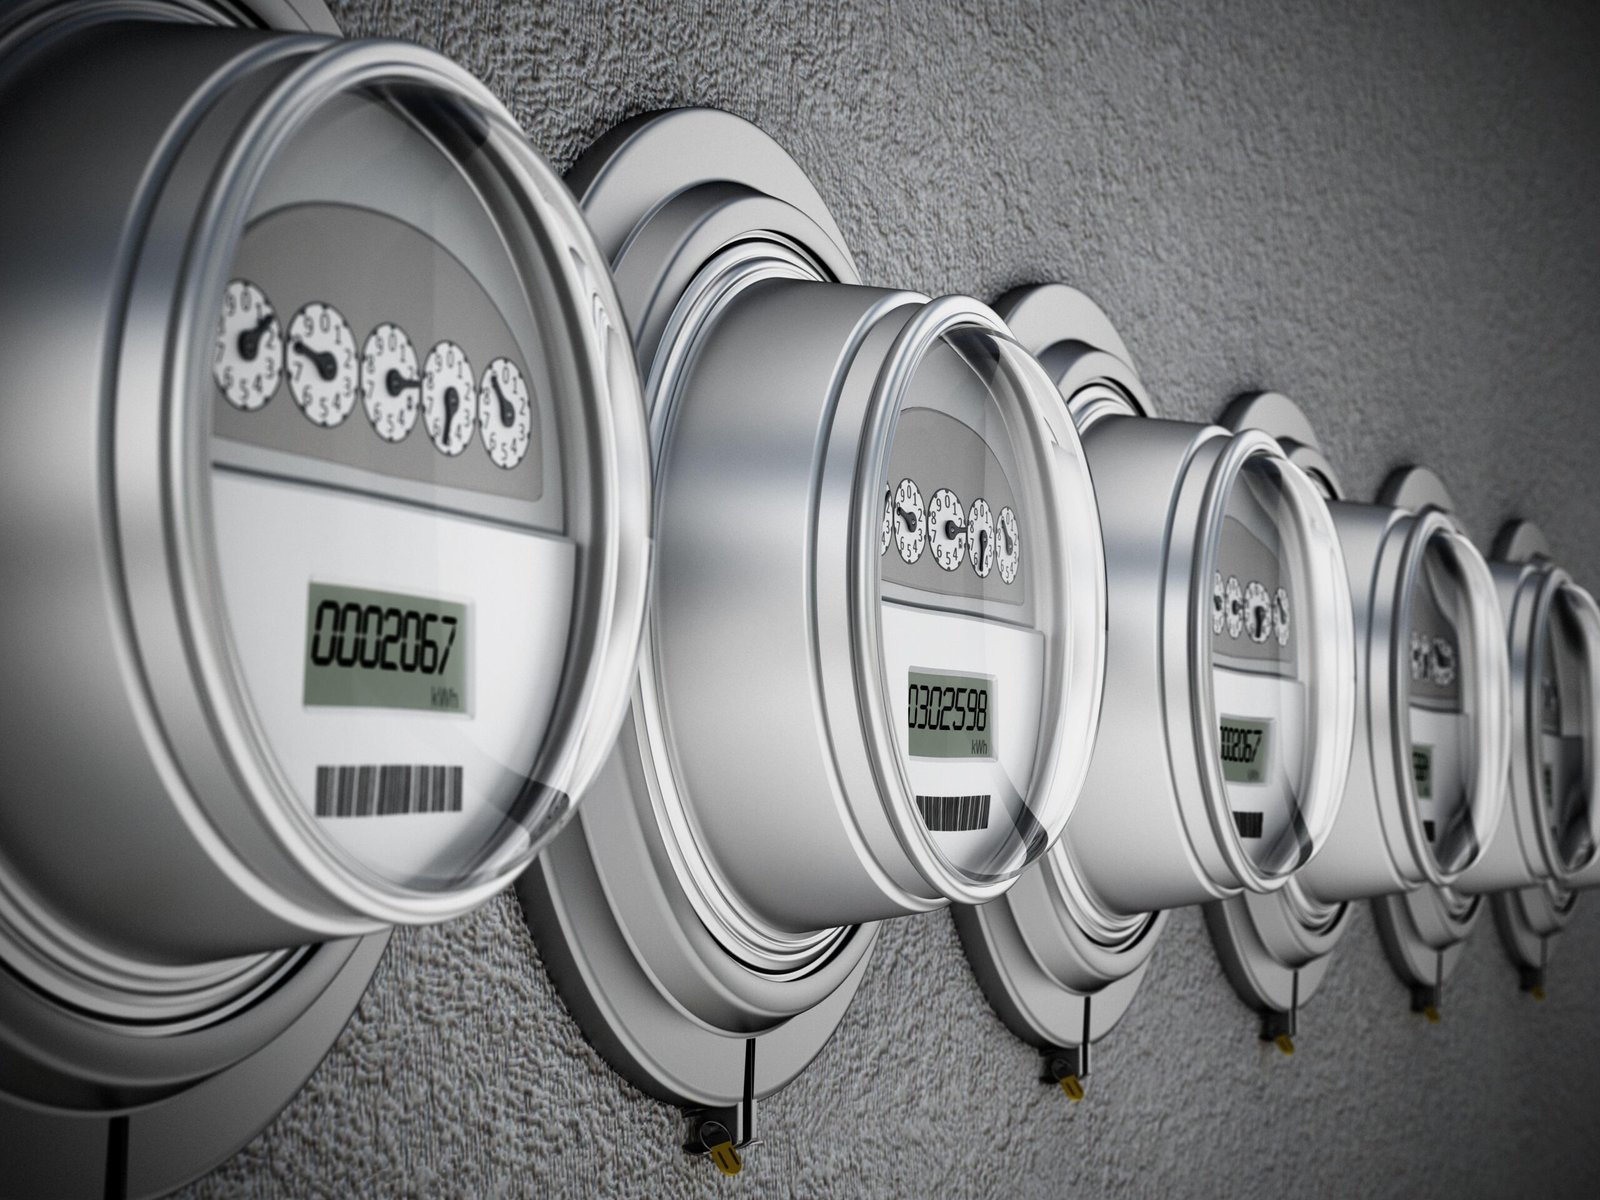 Schneider Power Meter Vulnerability Opens Door to Power Outages – Source: www.darkreading.com